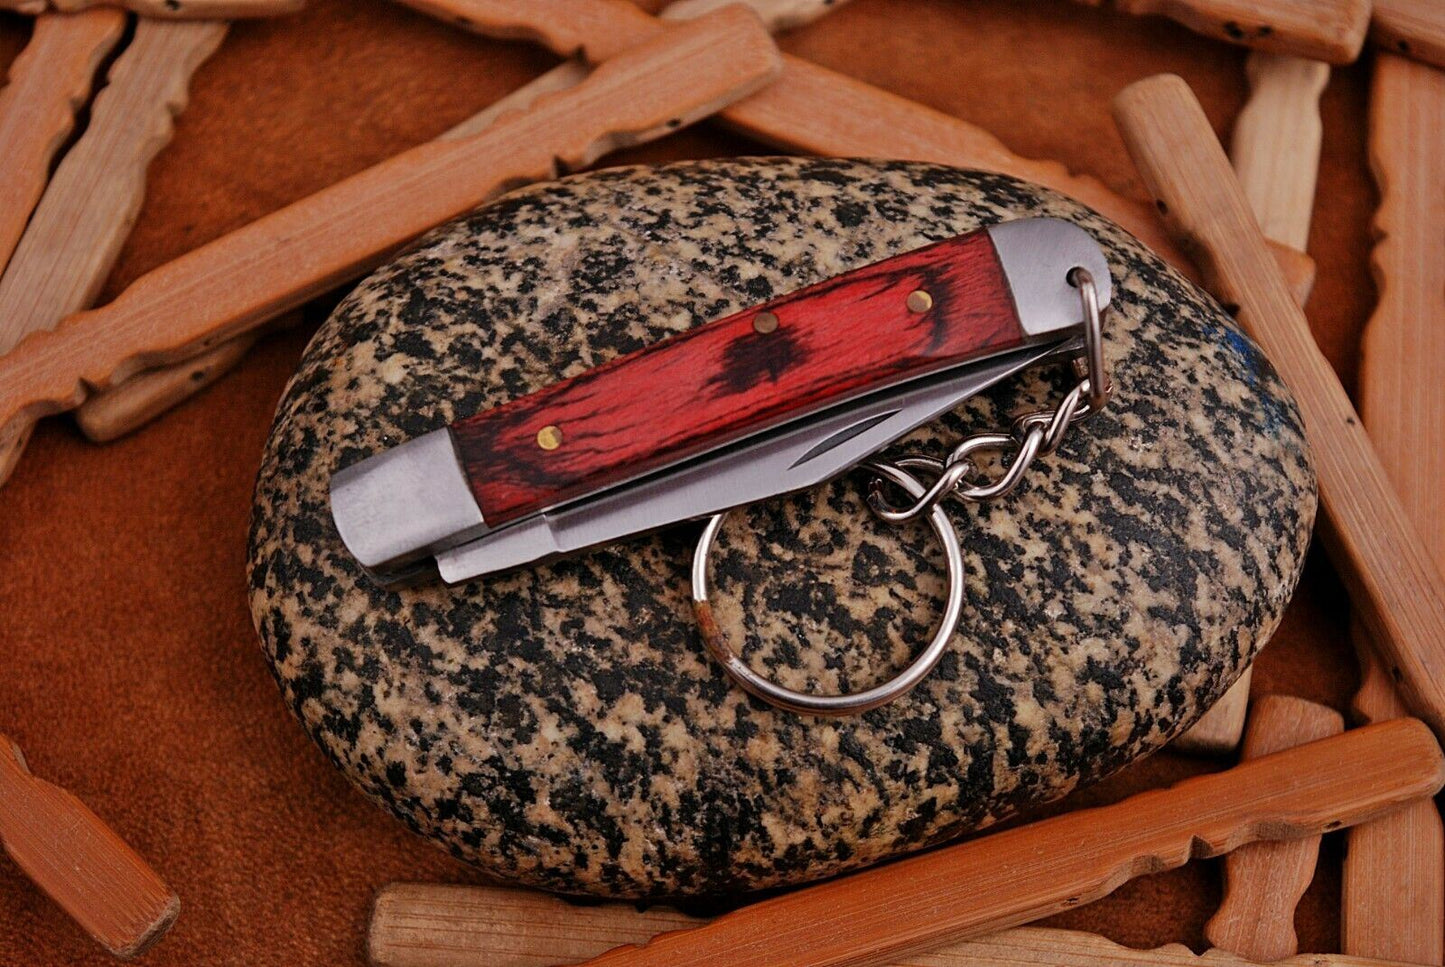 Mini Trapper Handmade Stainless Steel Folding Pocket Knife "Dollar Wood Handle"